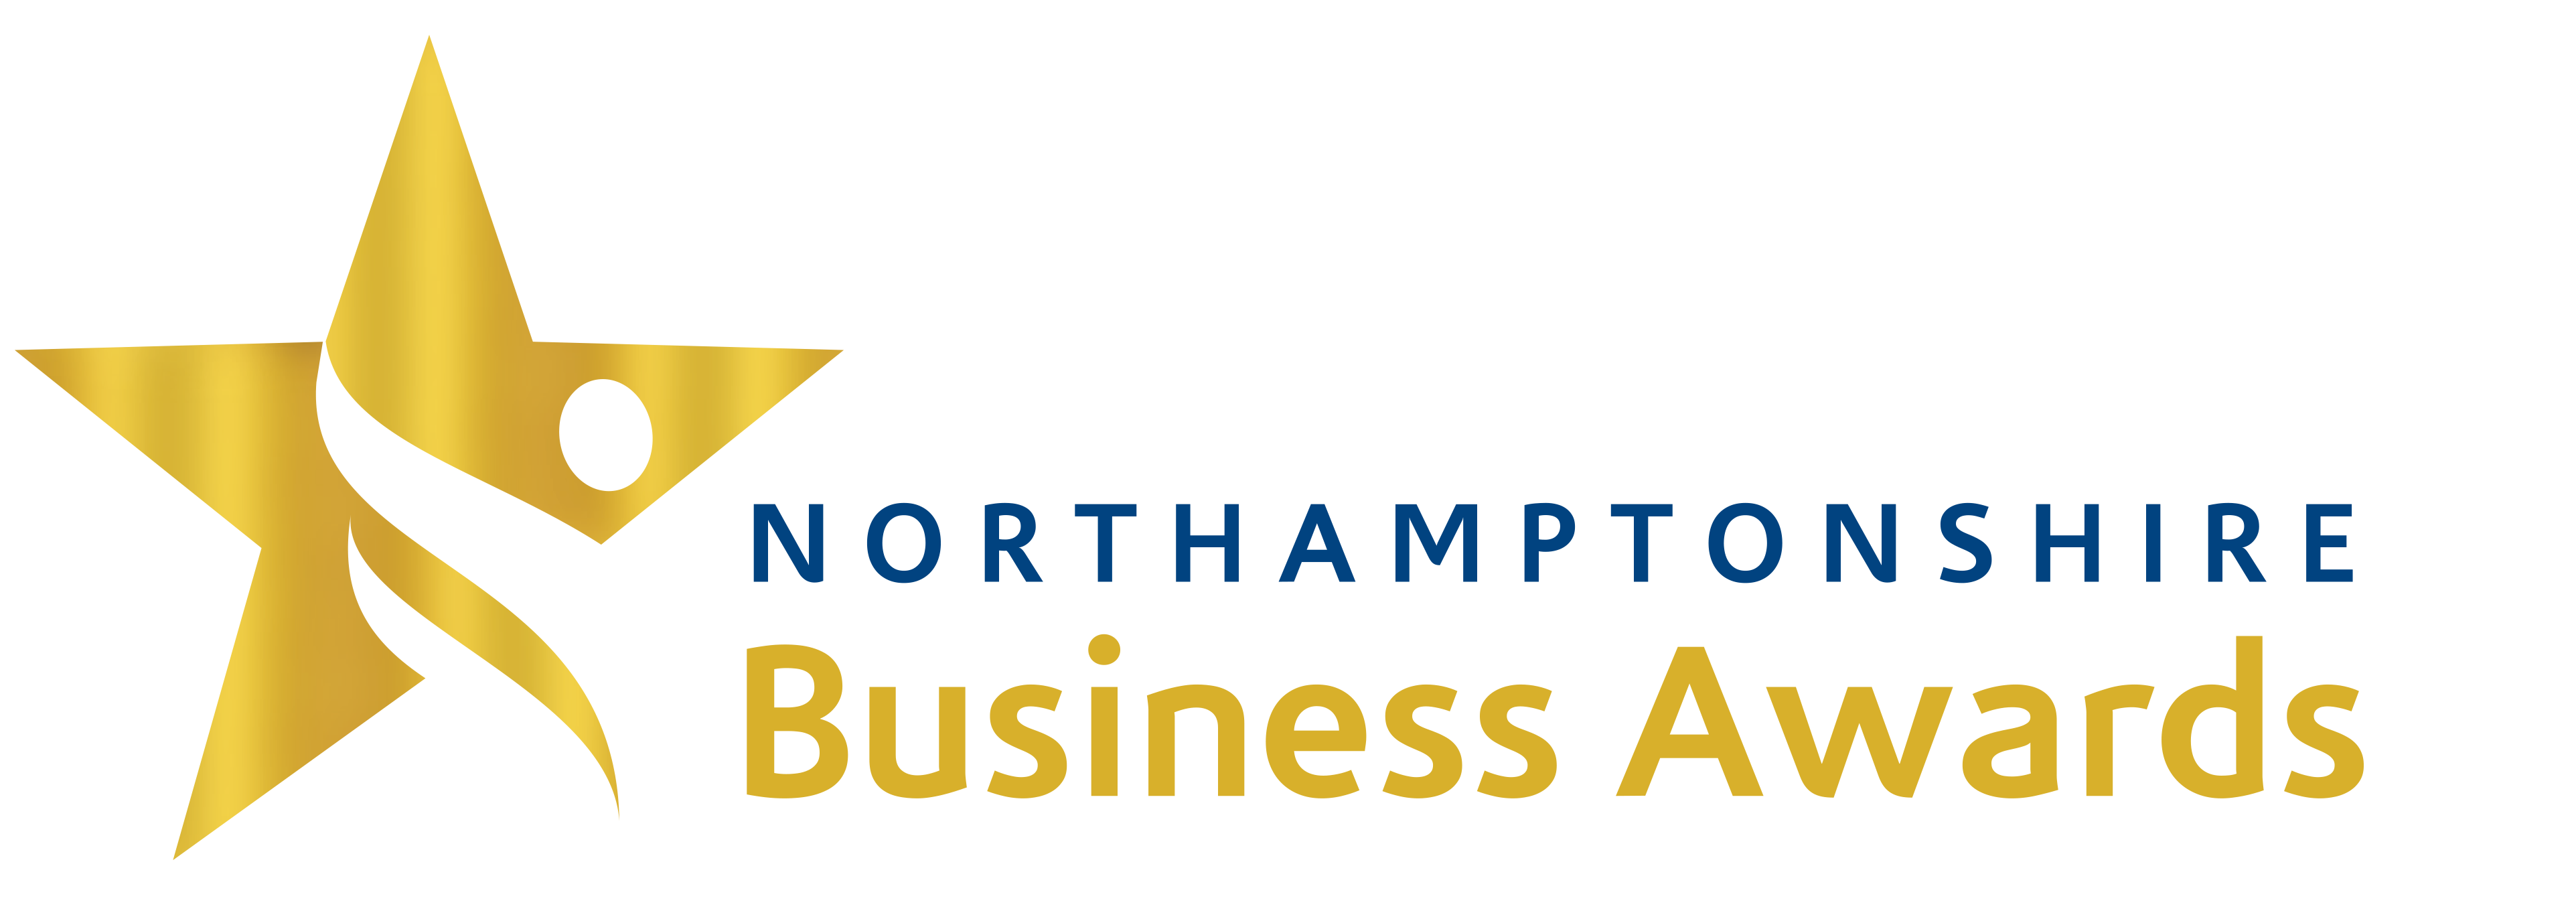 Northamptonshire Business Awards call for charities to shine